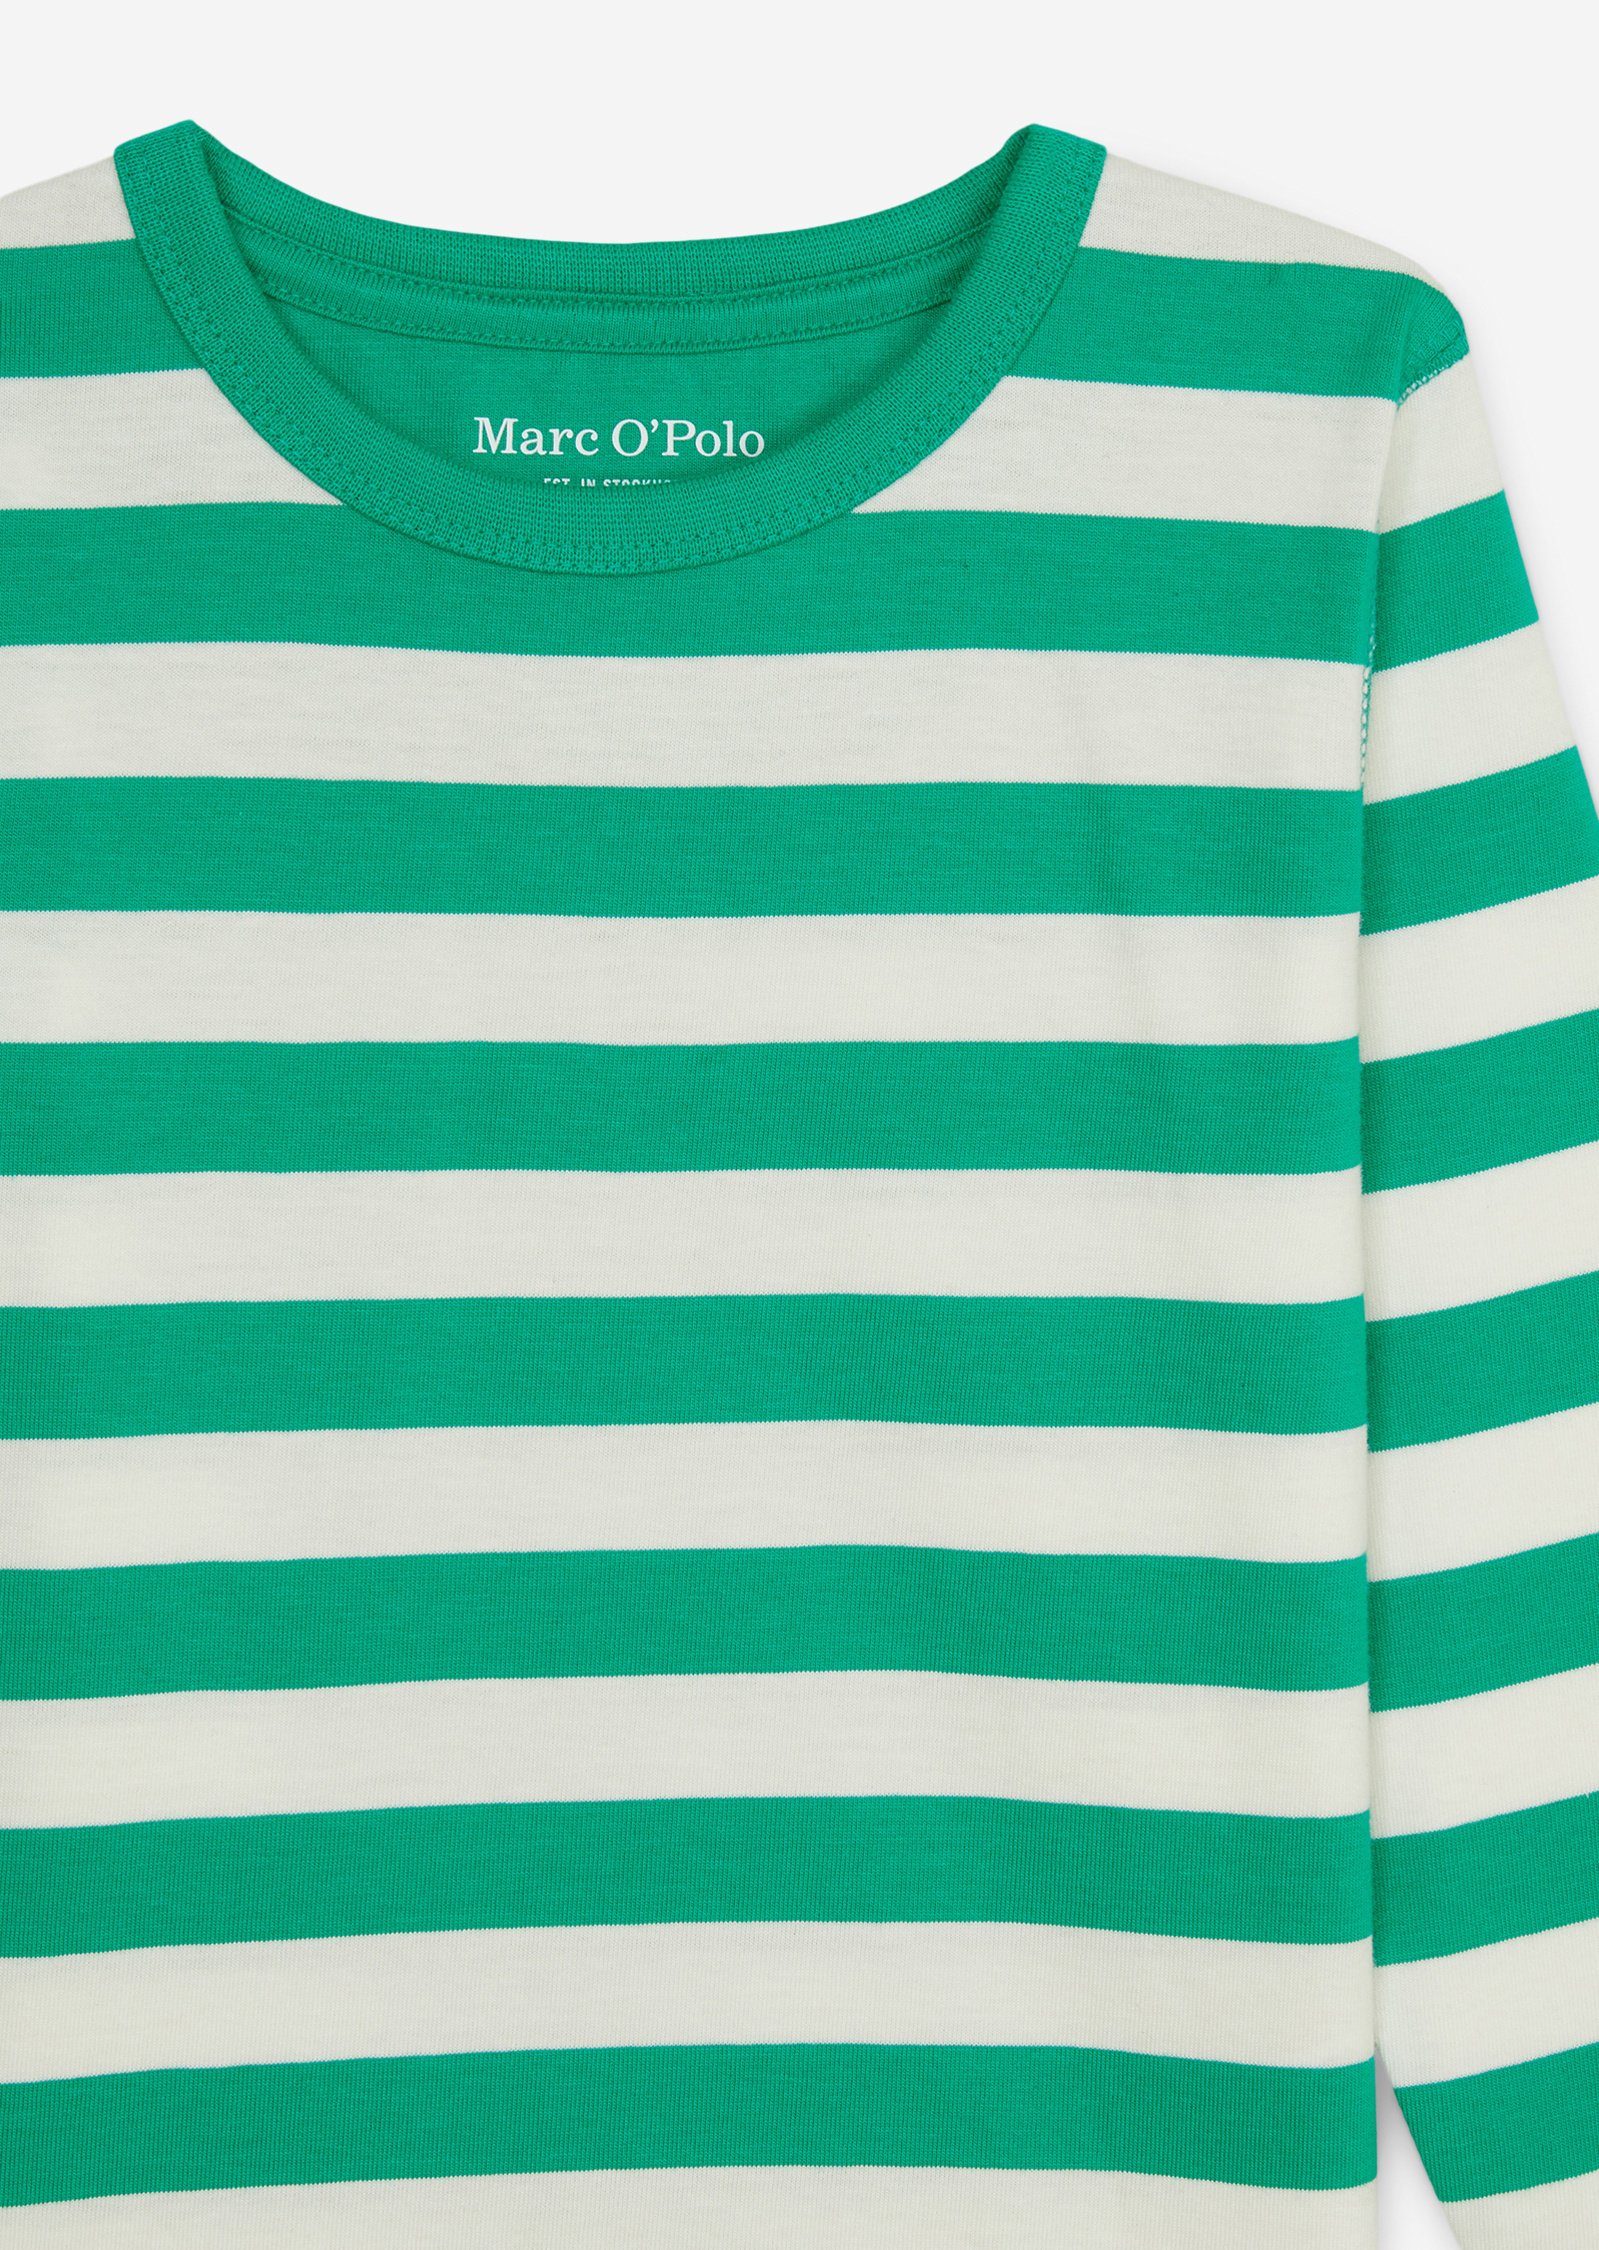 Bio-Baumwoll-Jersey Langarmshirt aus Marc O'Polo grün